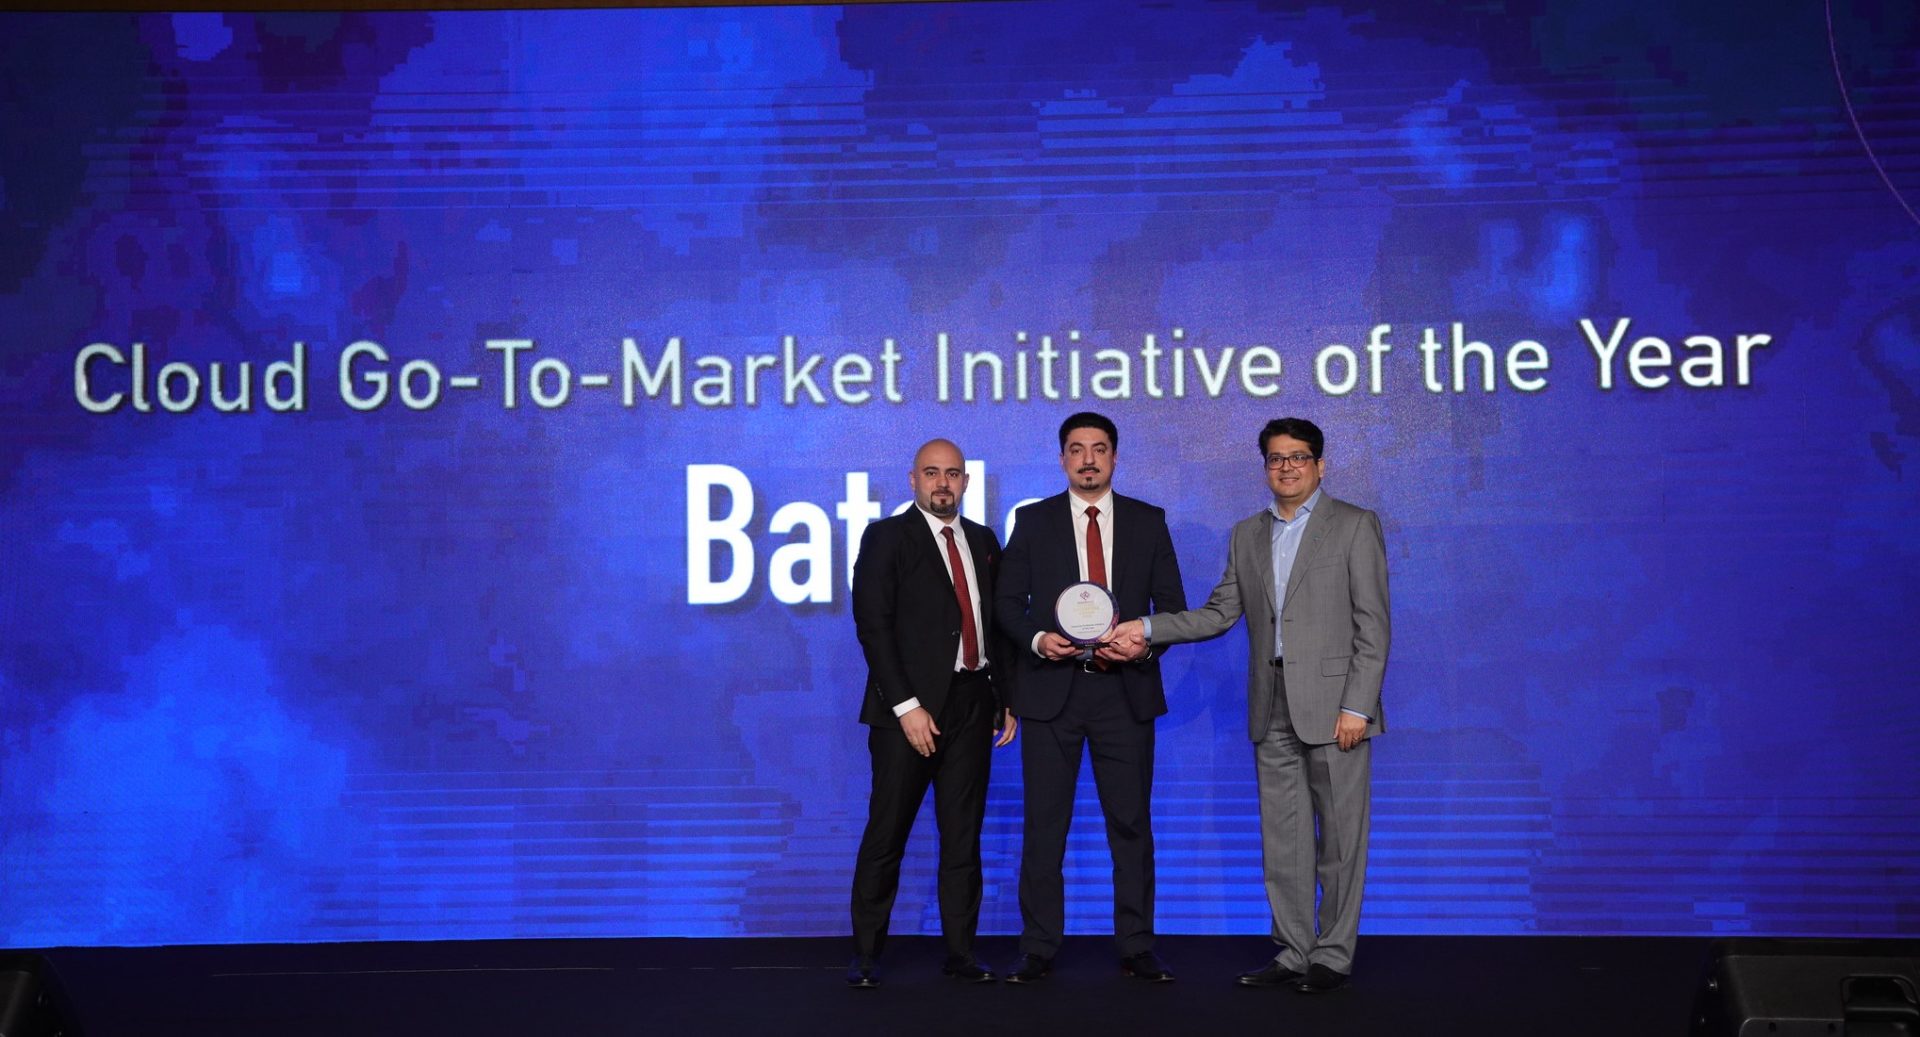 Batelco Wins ‘Cloud Go-to-Market Initiative of the Year’ Award at Tahawultech.com Future Enterprise Awards 2021